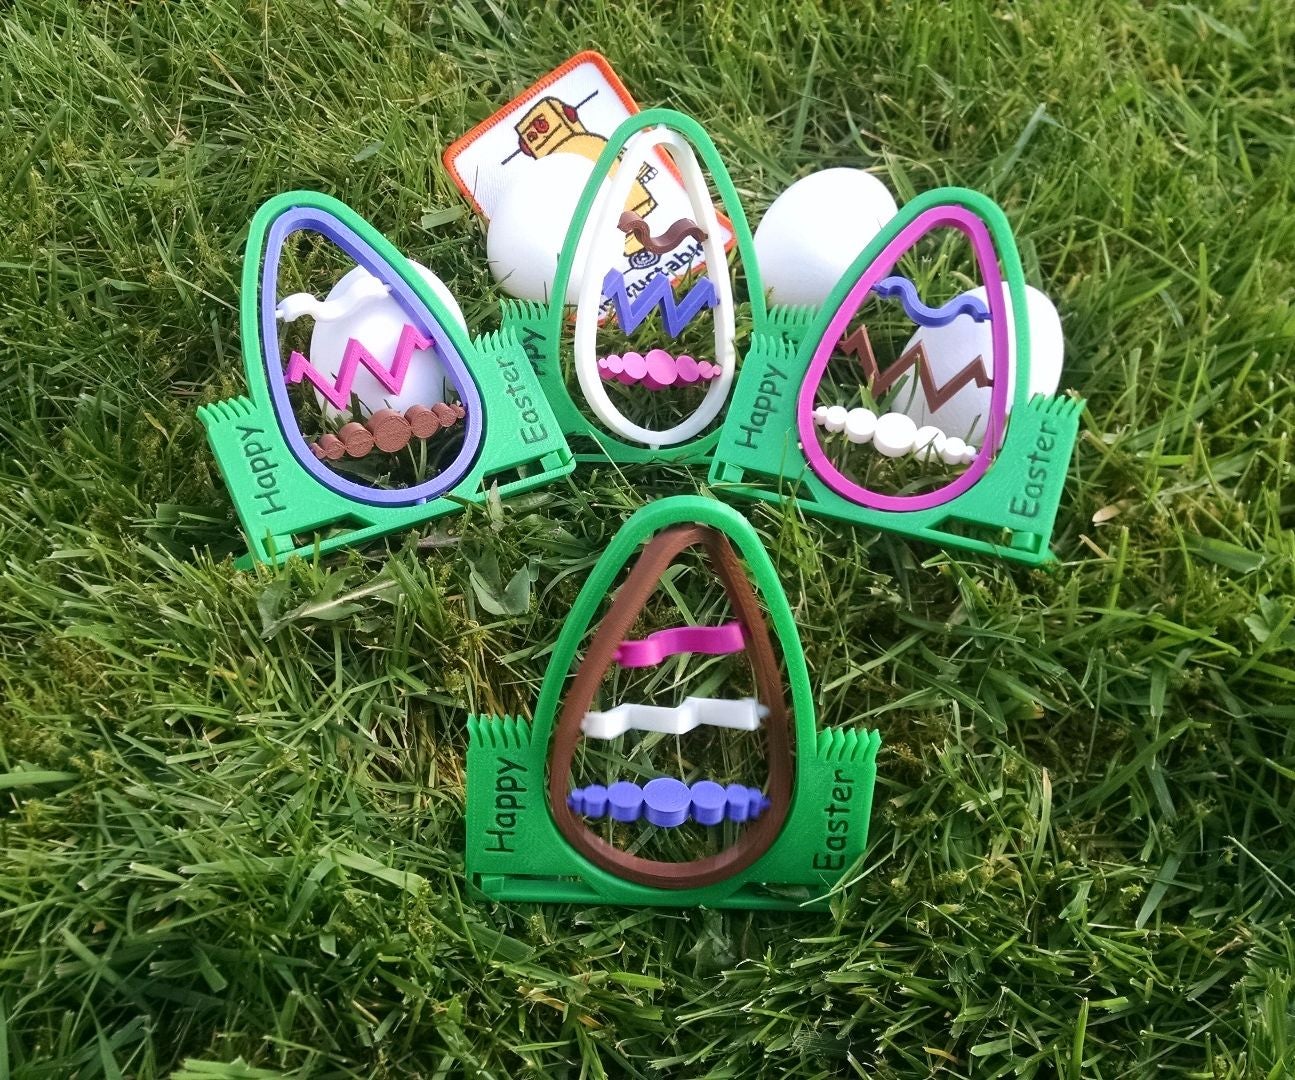 3D Printed Spinning Easter Egg